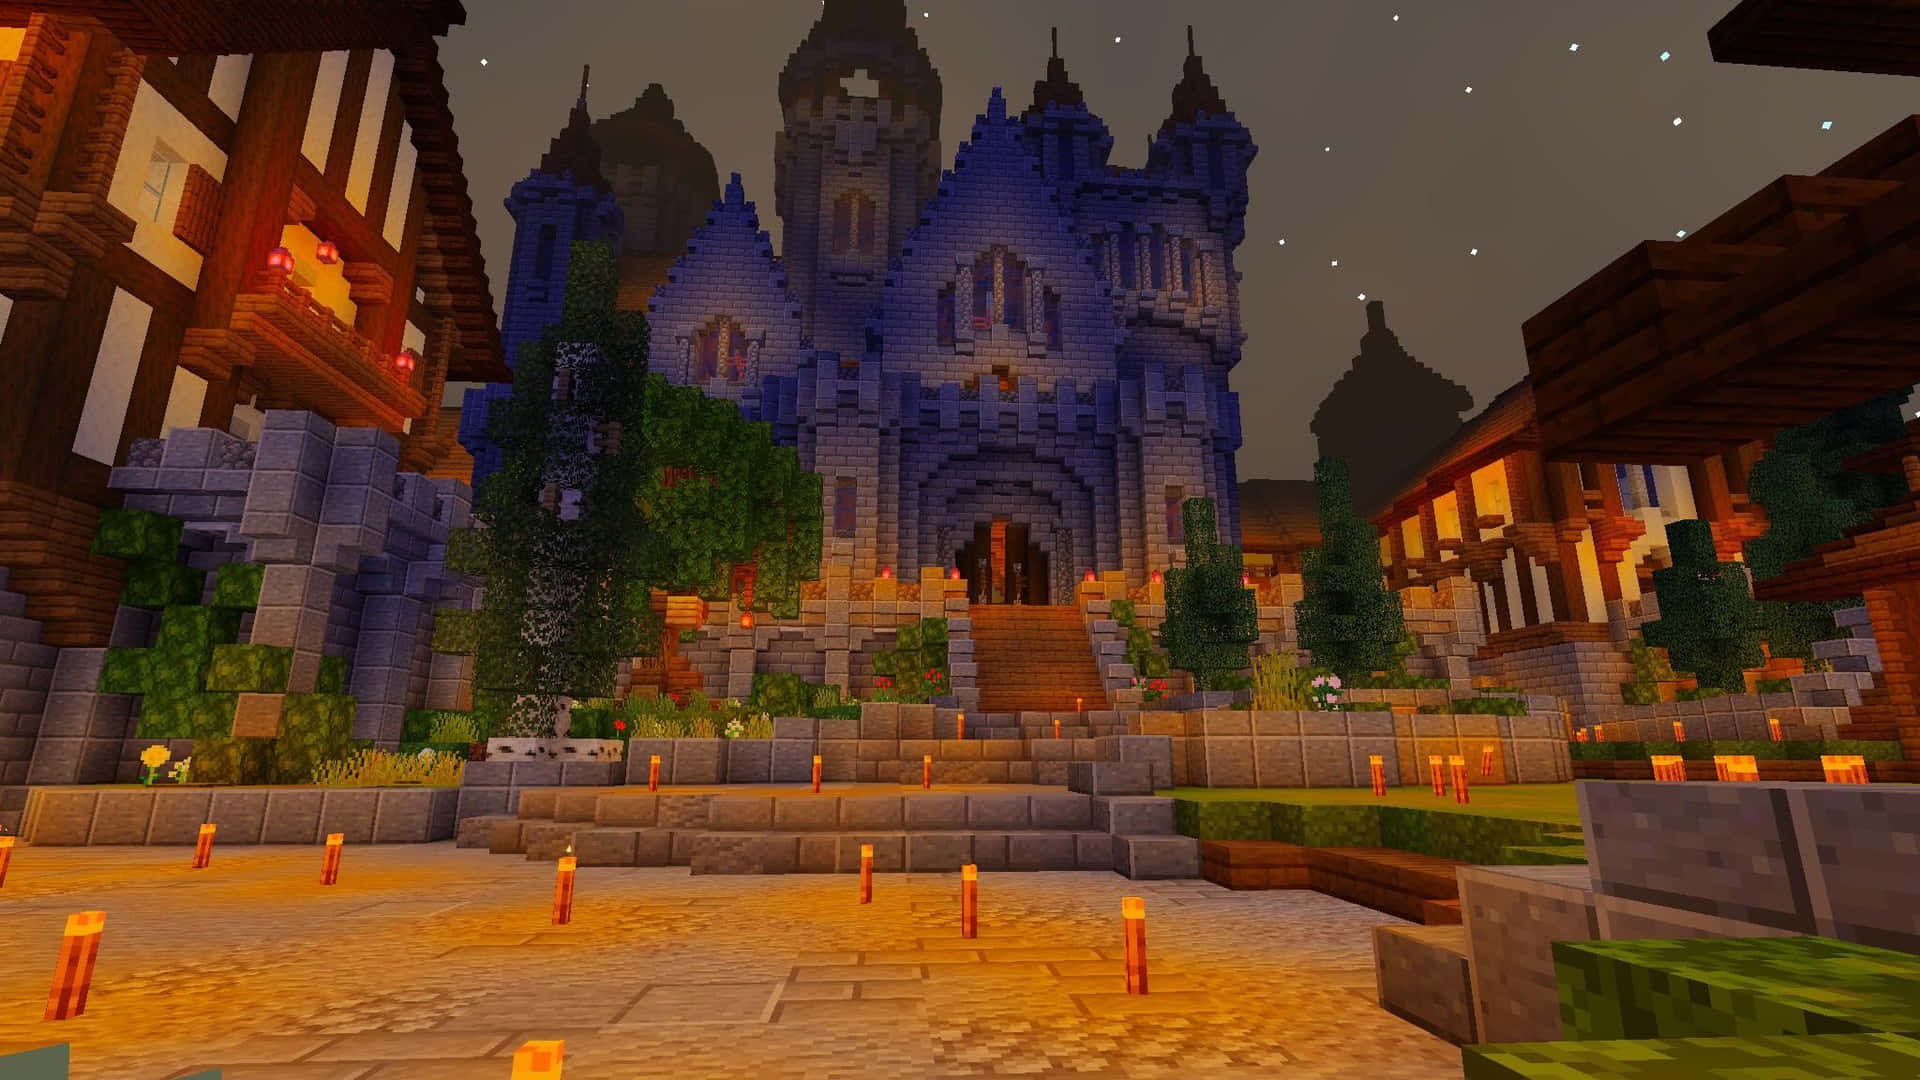 Stunning Minecraft Castle Overlooking the Kingdom Wallpaper